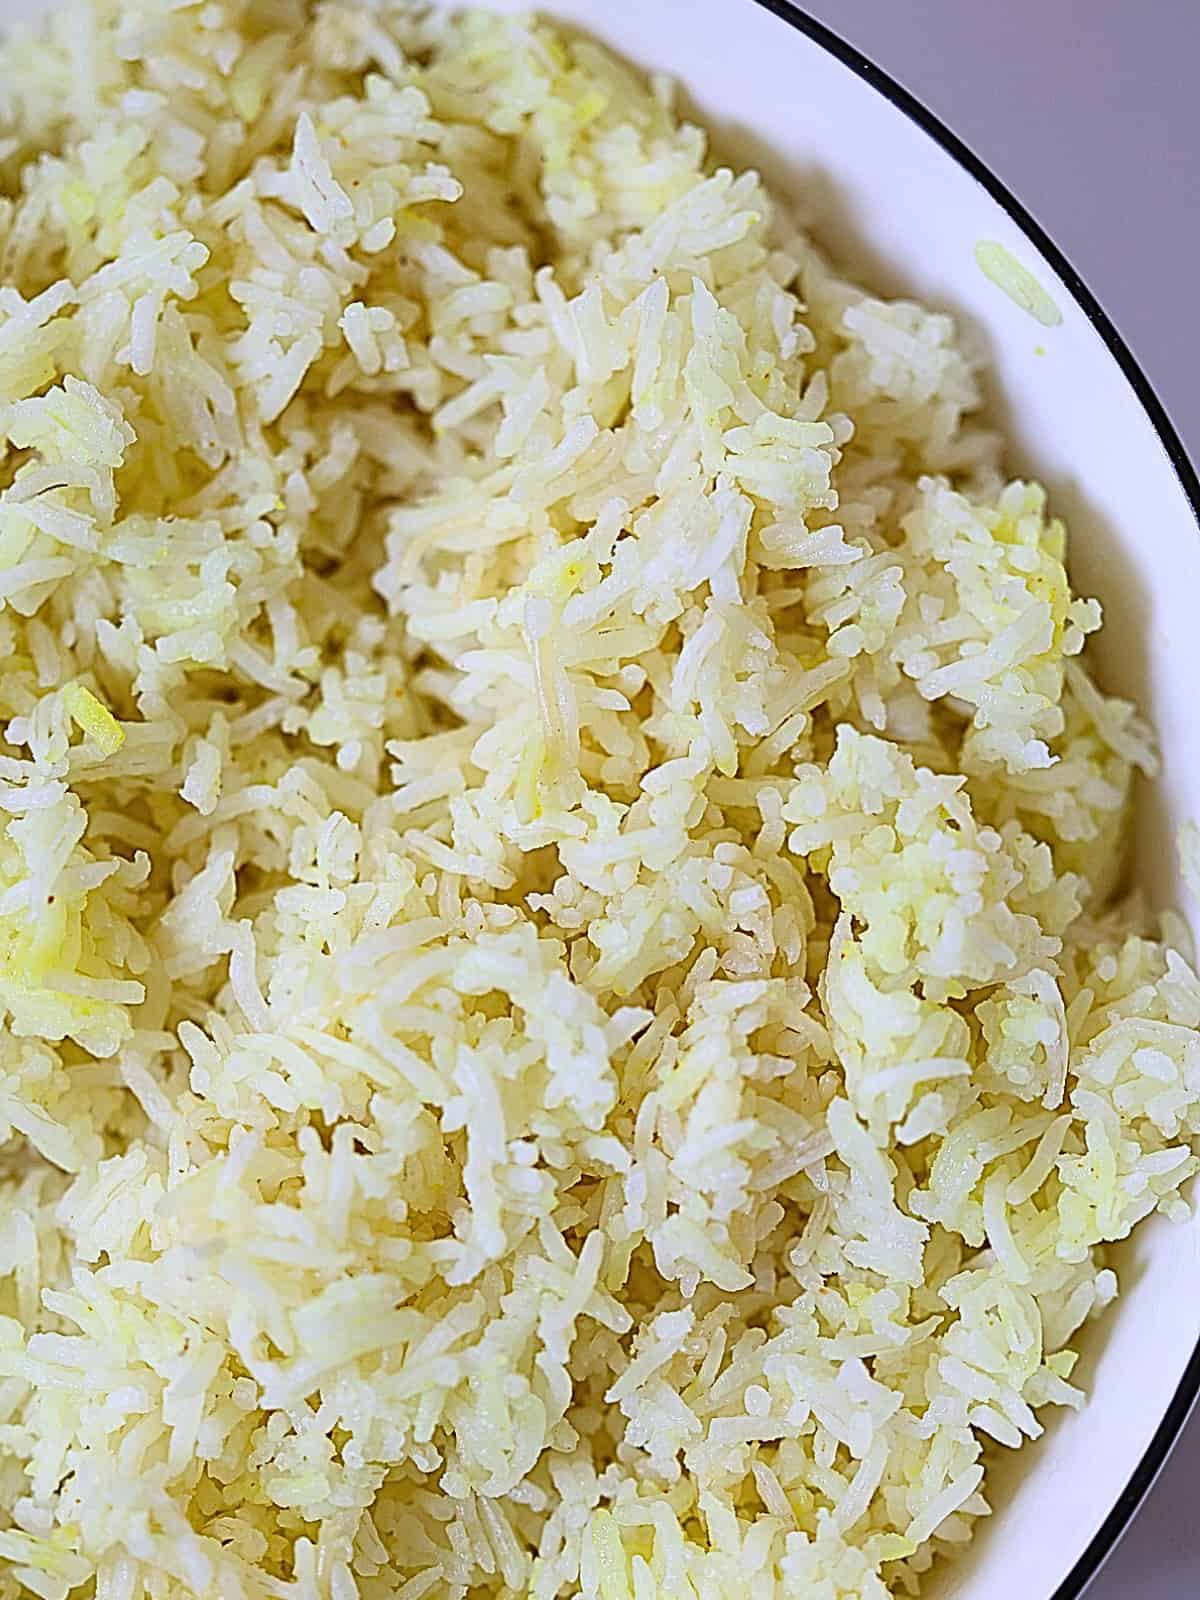 Instant pot white basmati rice colored yellow with saffron in a white bowl